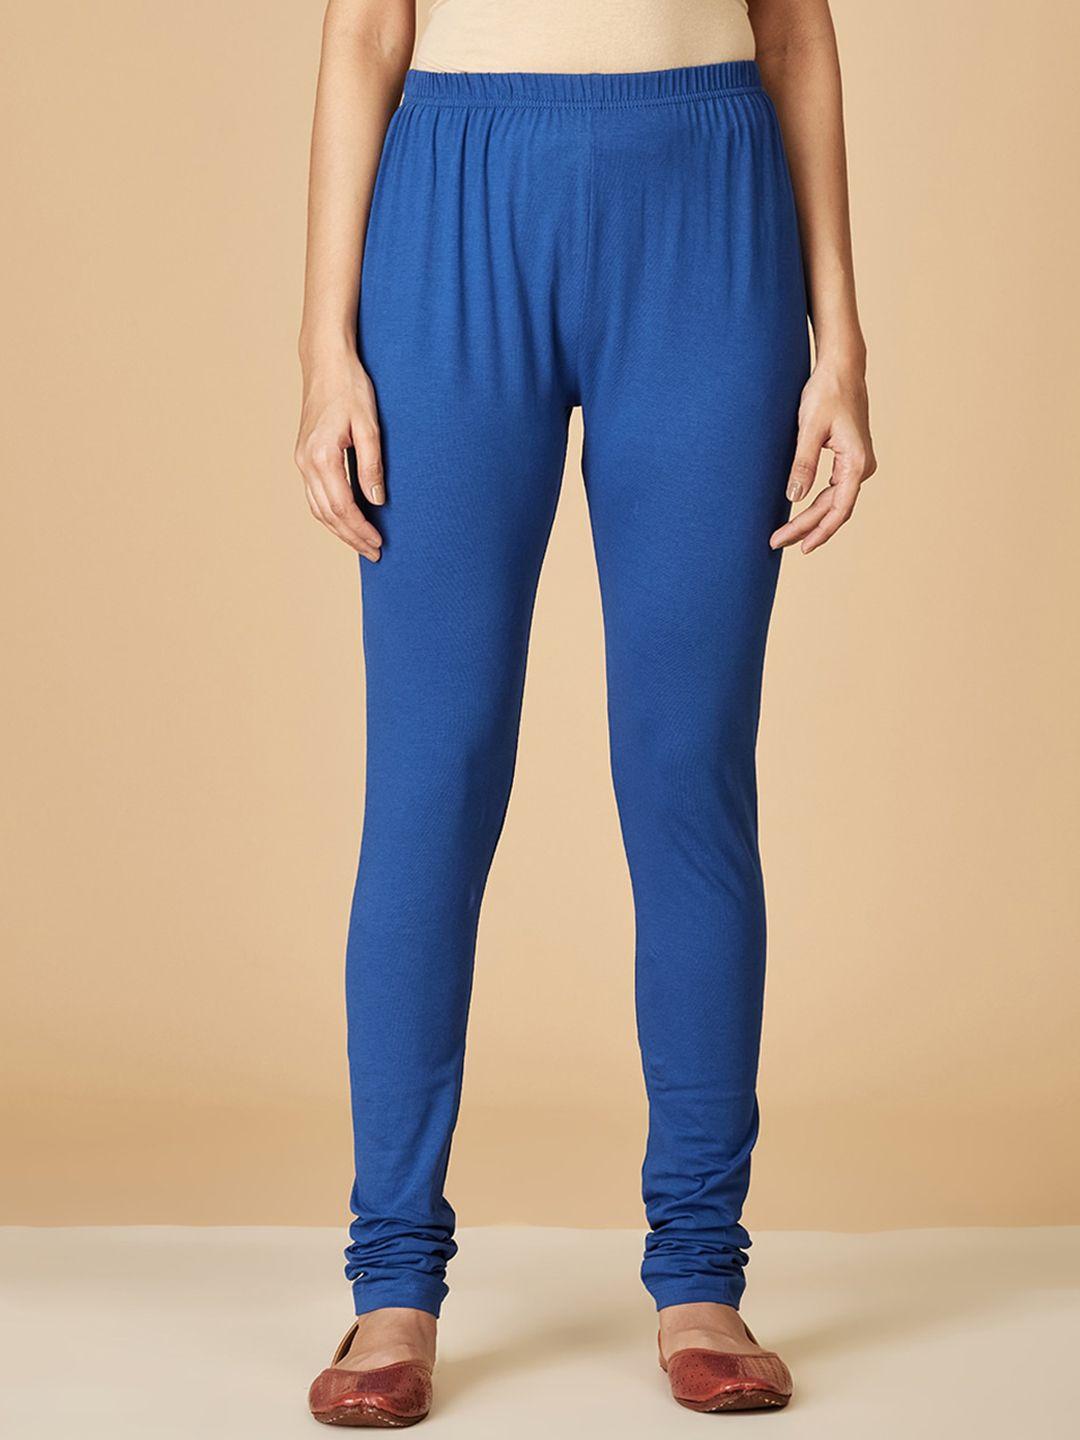 fabindia blue churidar length cotton leggings